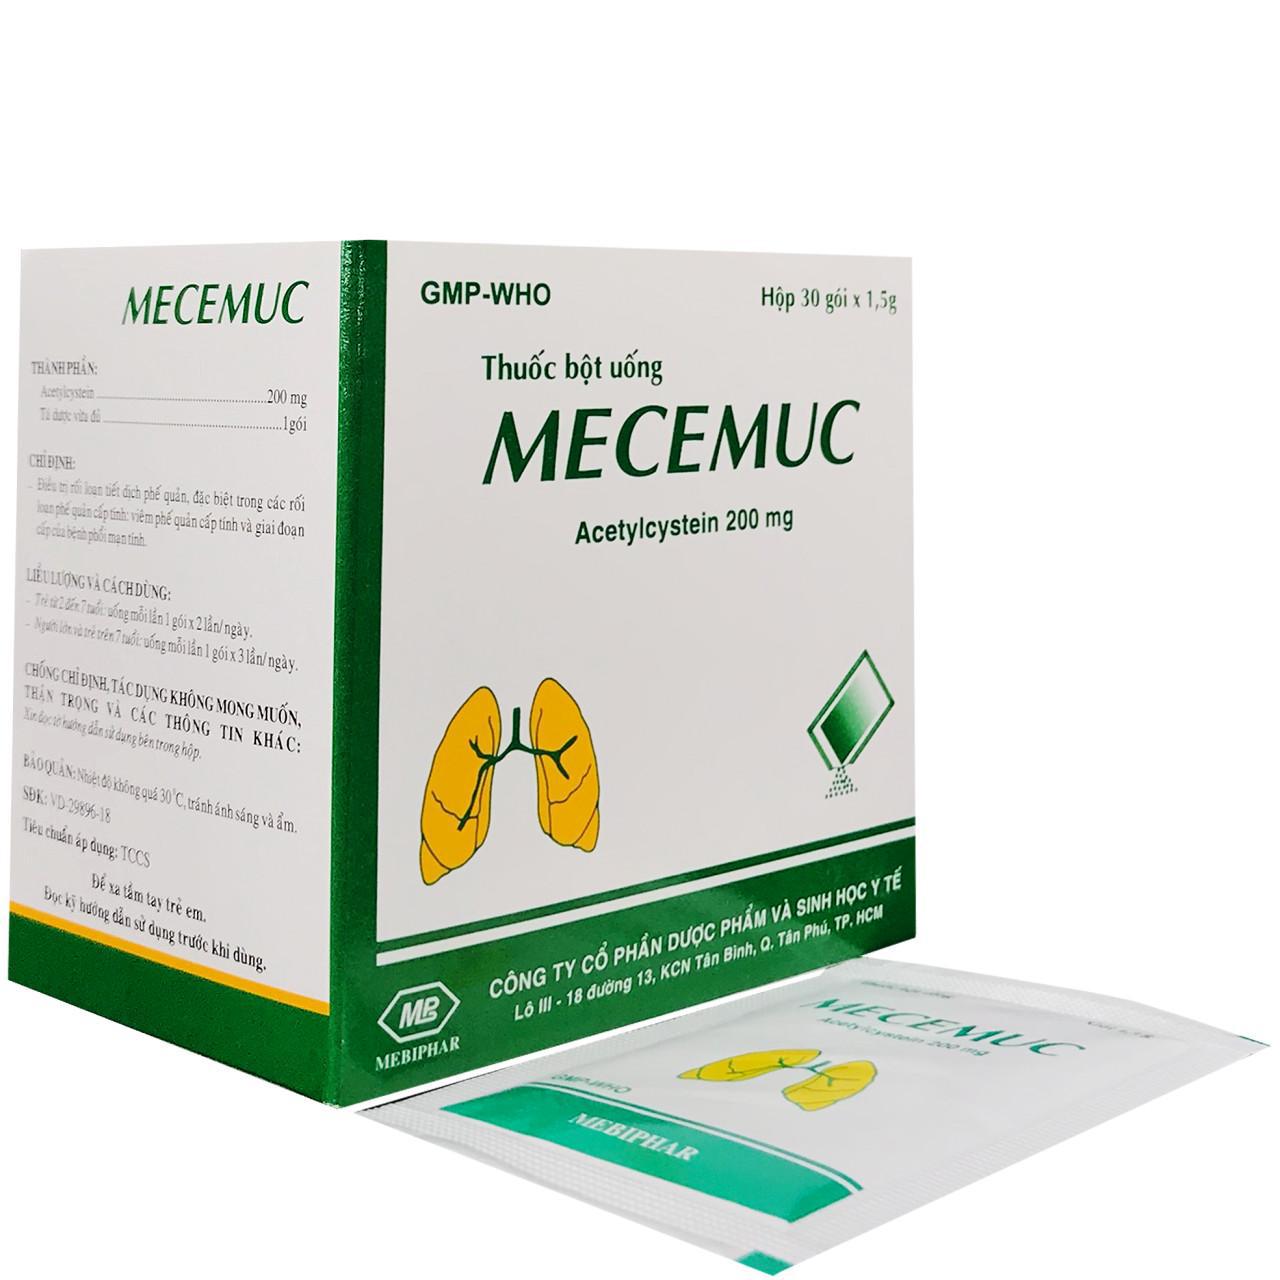 Mecemuc (Acetylcysteine) 200mg Mebiphar (H/30g/1.5gr)